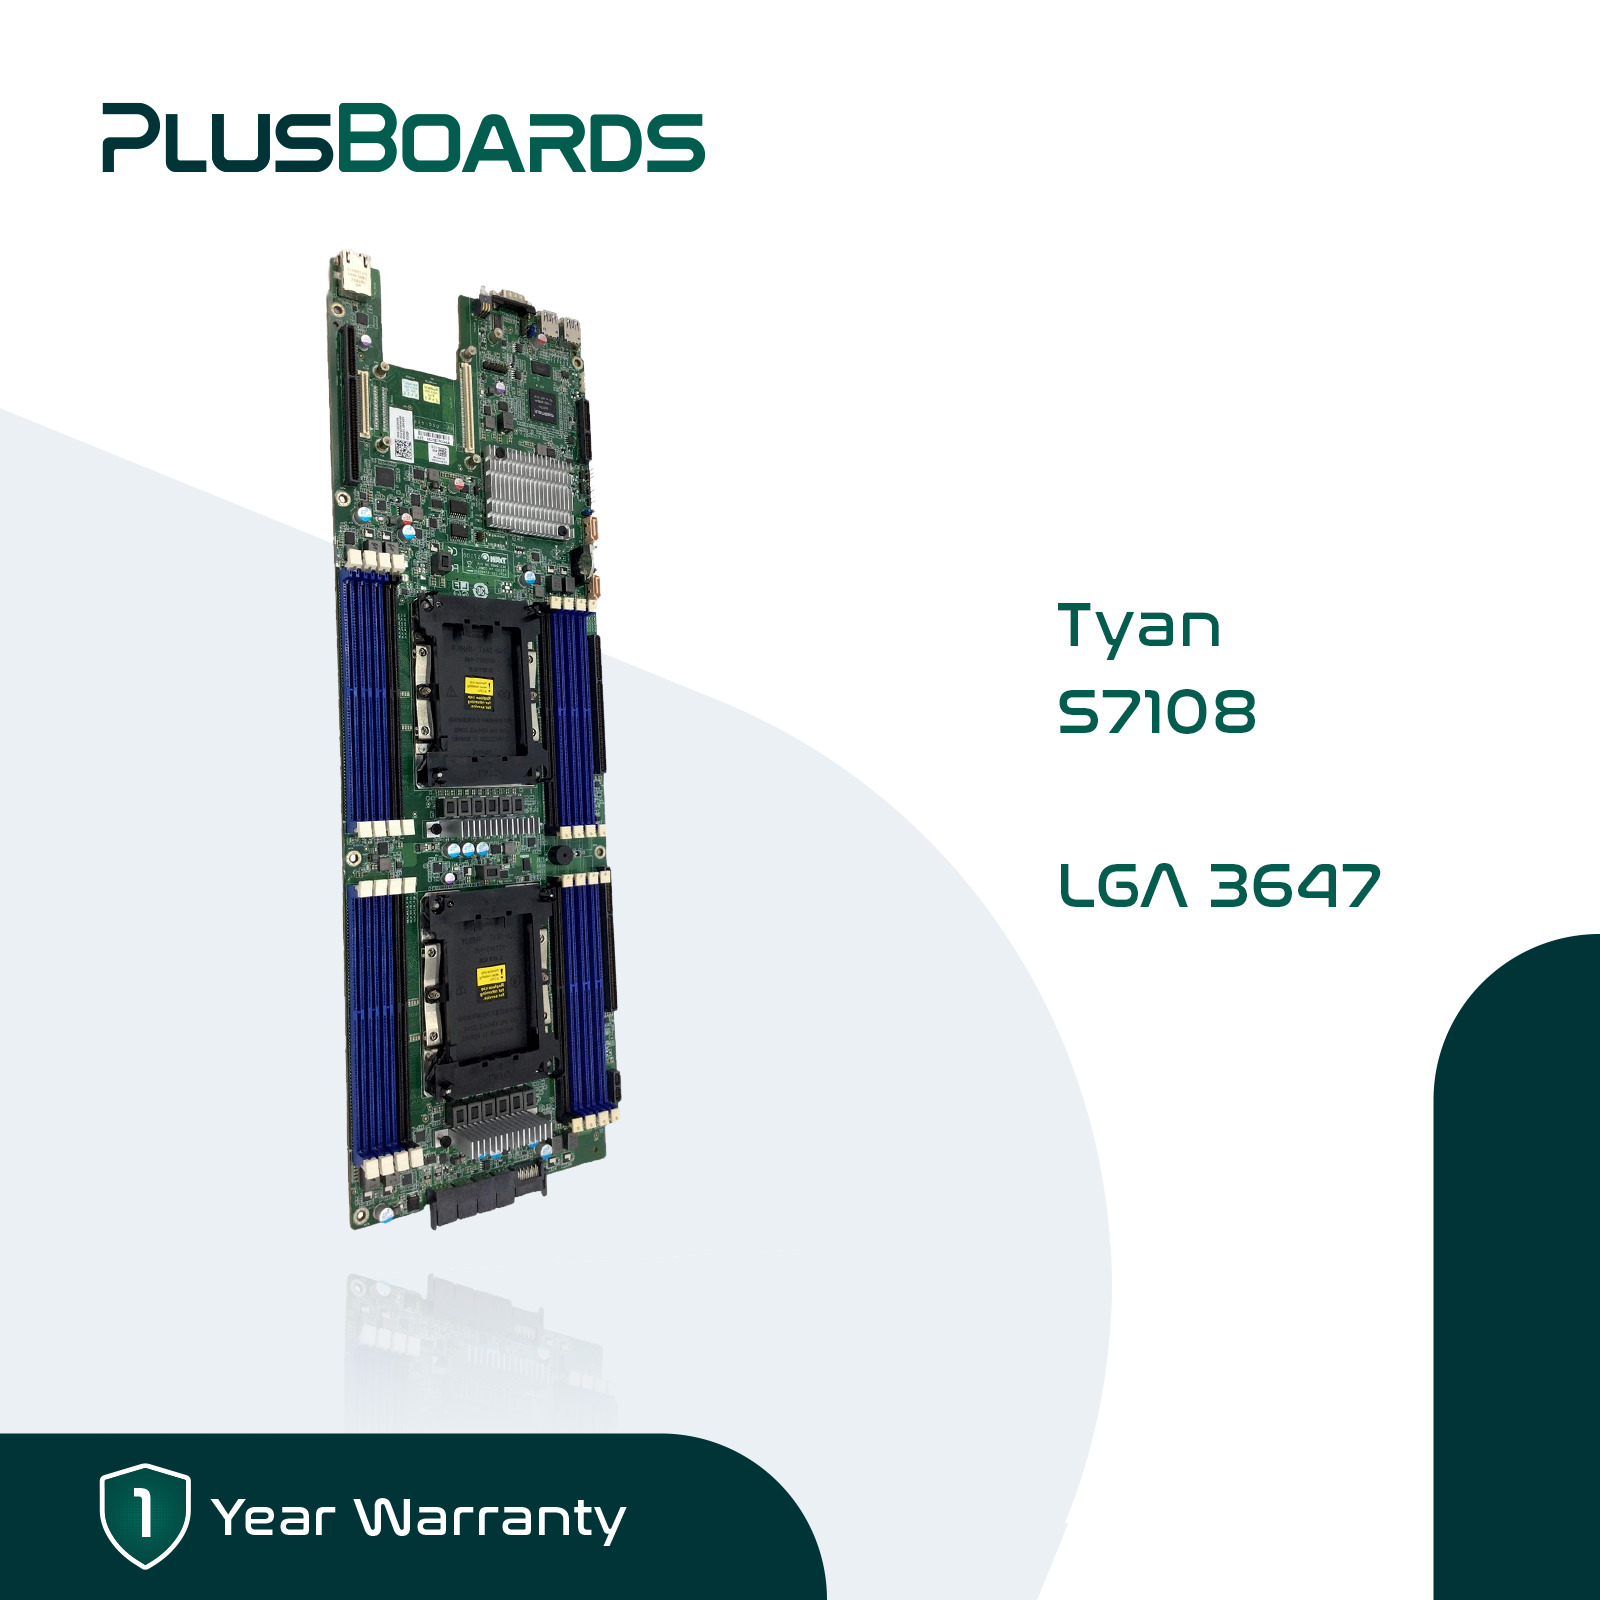 New Tyan S7108 Skylake LGA 3647 Motherboard Only for 2U 4 Node Blade Server